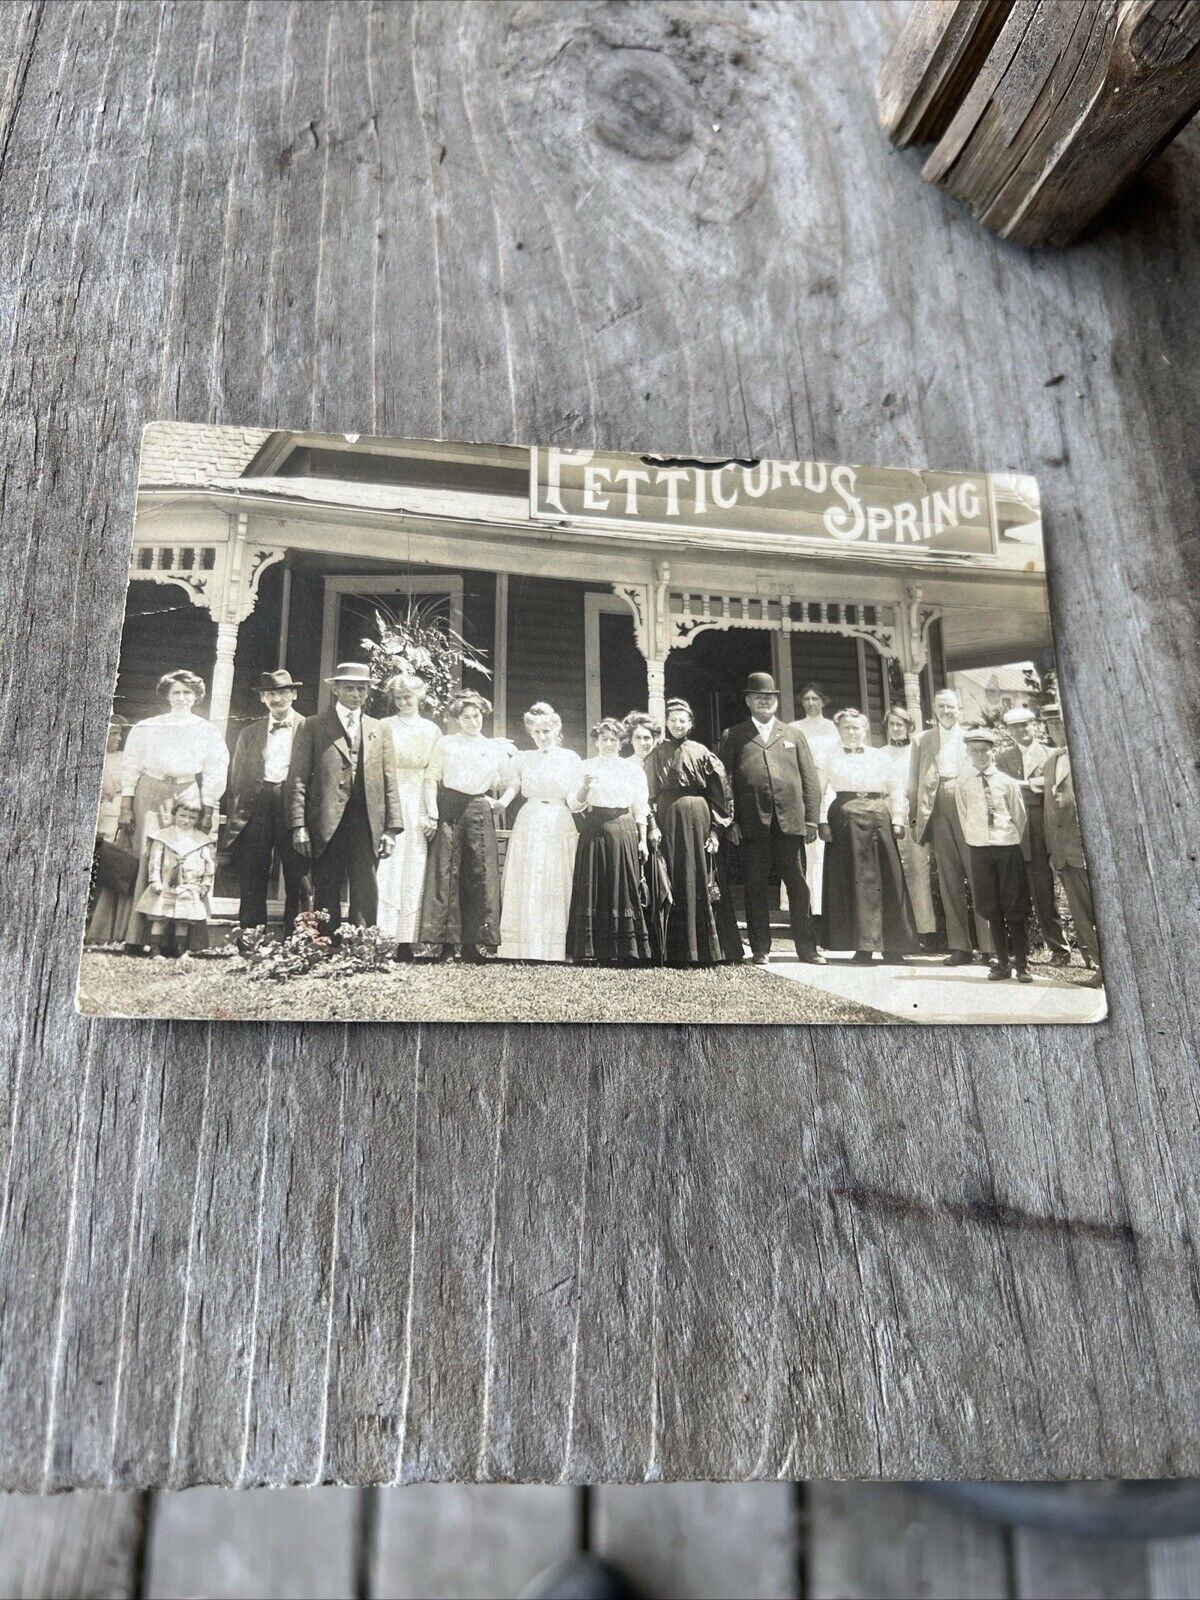 1898 Petticord Spring real photo postcard